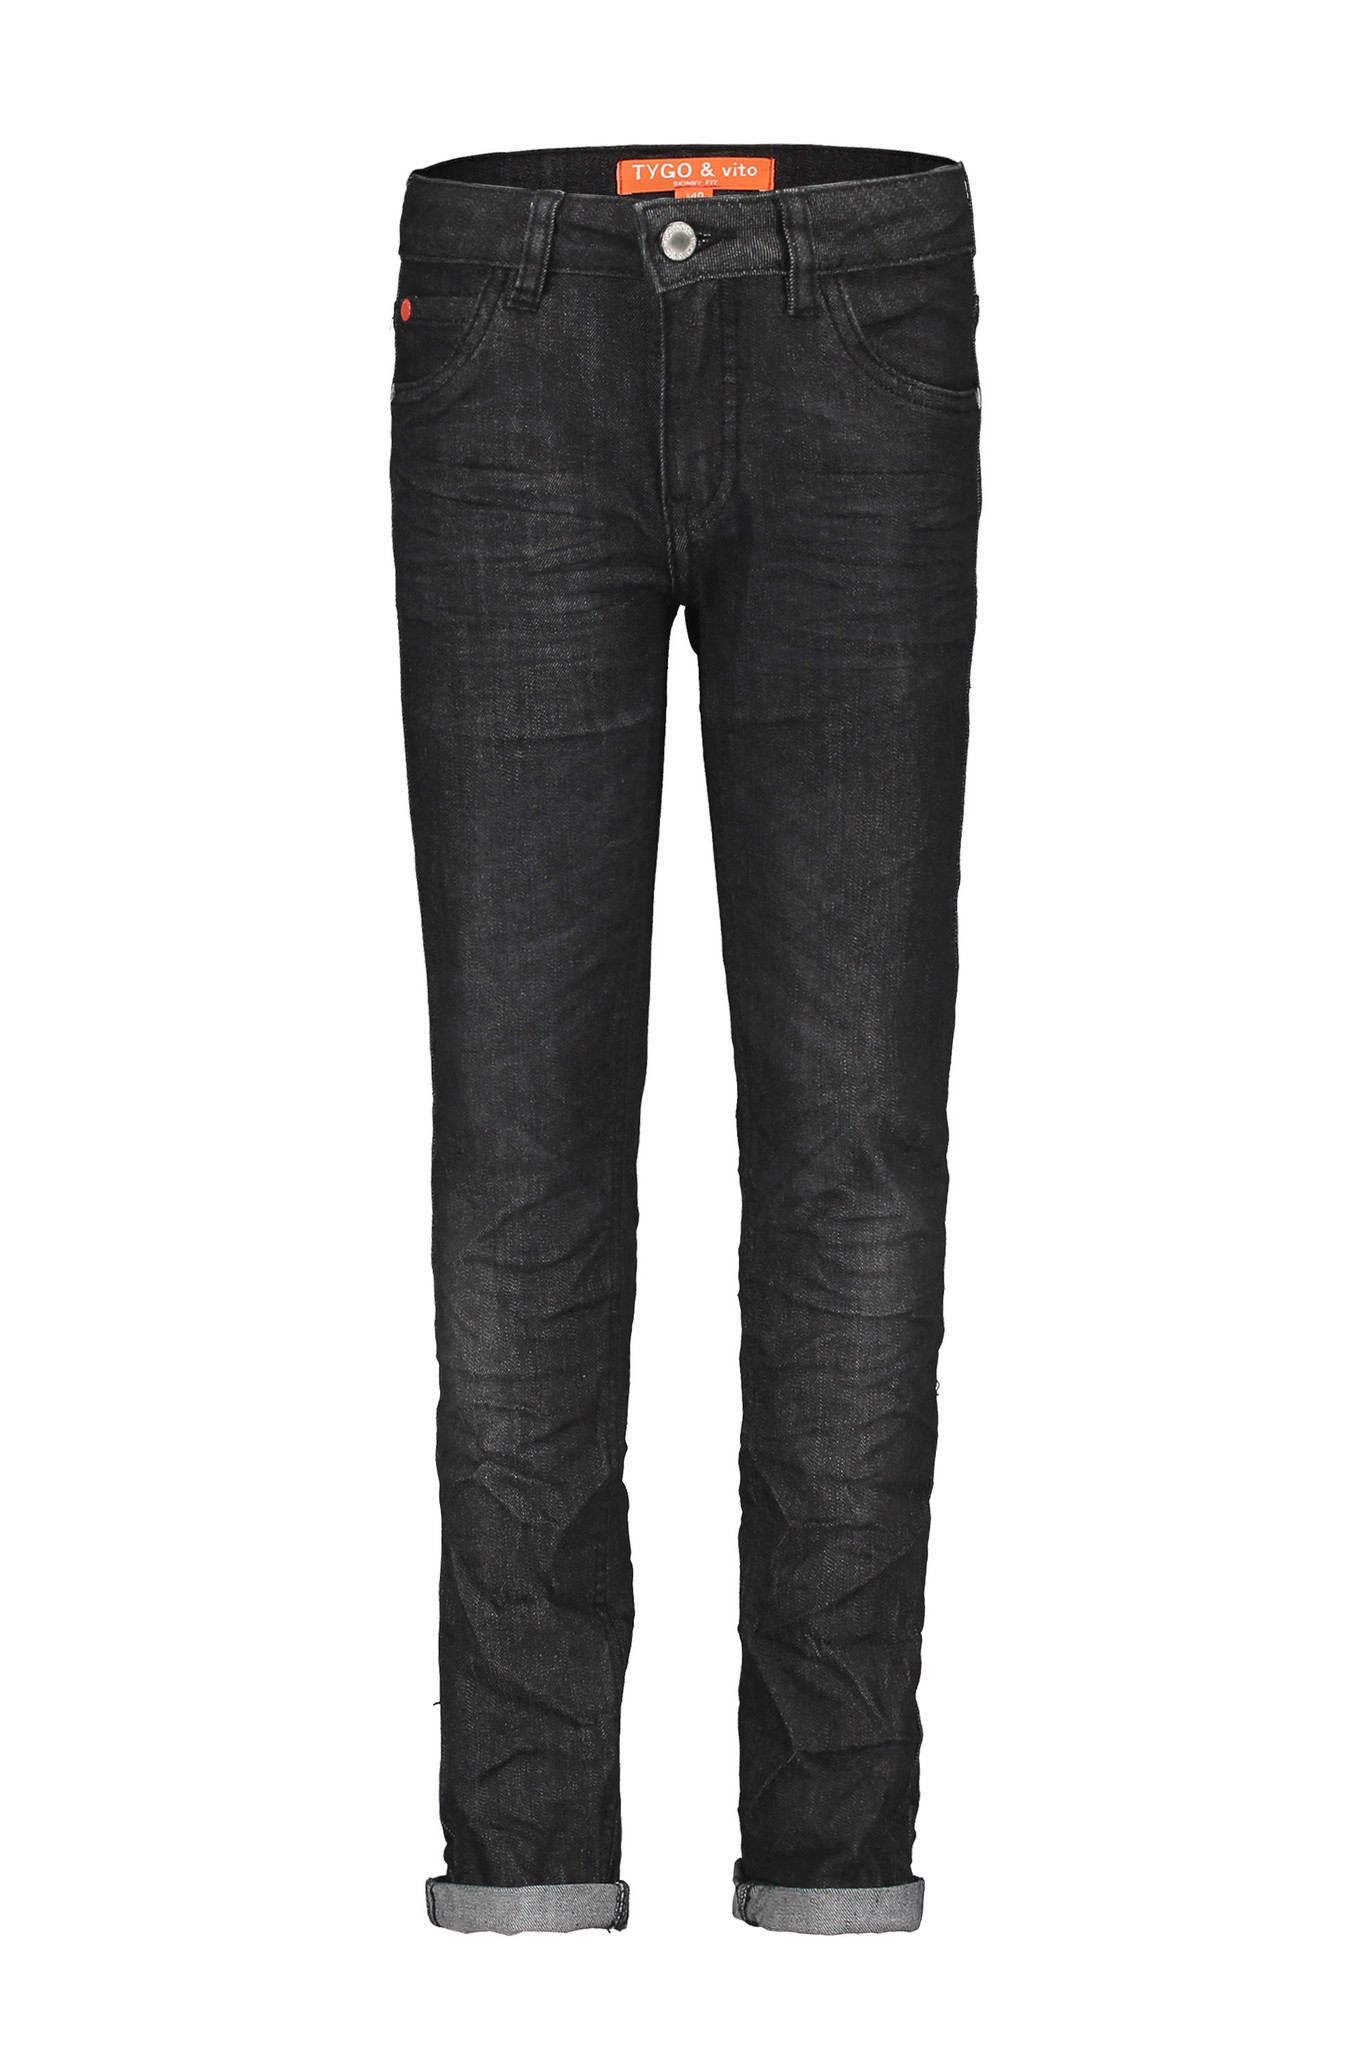 Jongens skinny stretch jeans broek - Zwart